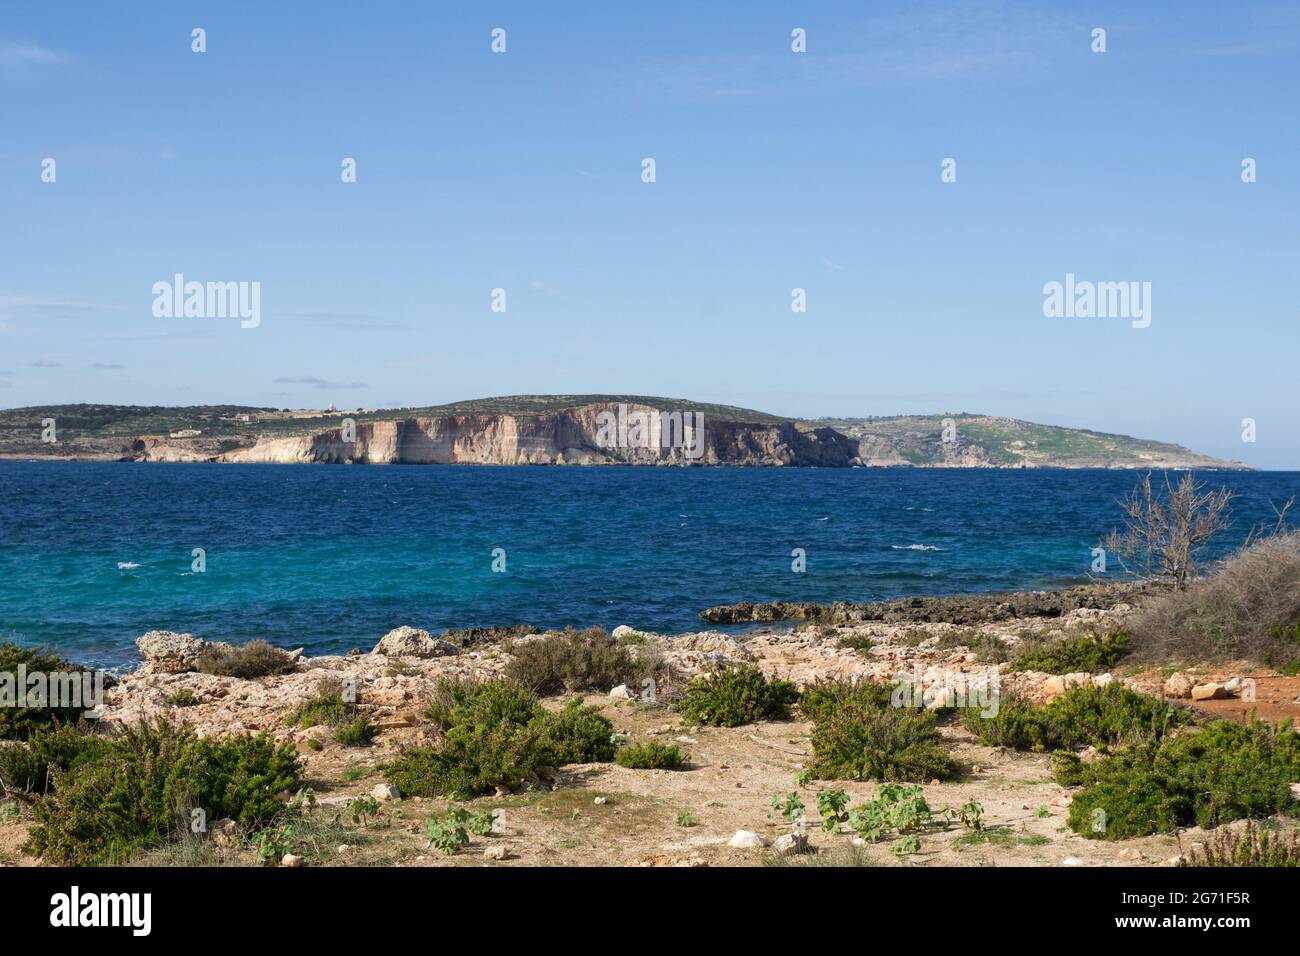 MARSAXLOKK, MALTA - 01 JAN, 2020: View to the island Gozo from rocky cliffs of the island of Malta Stock Photo